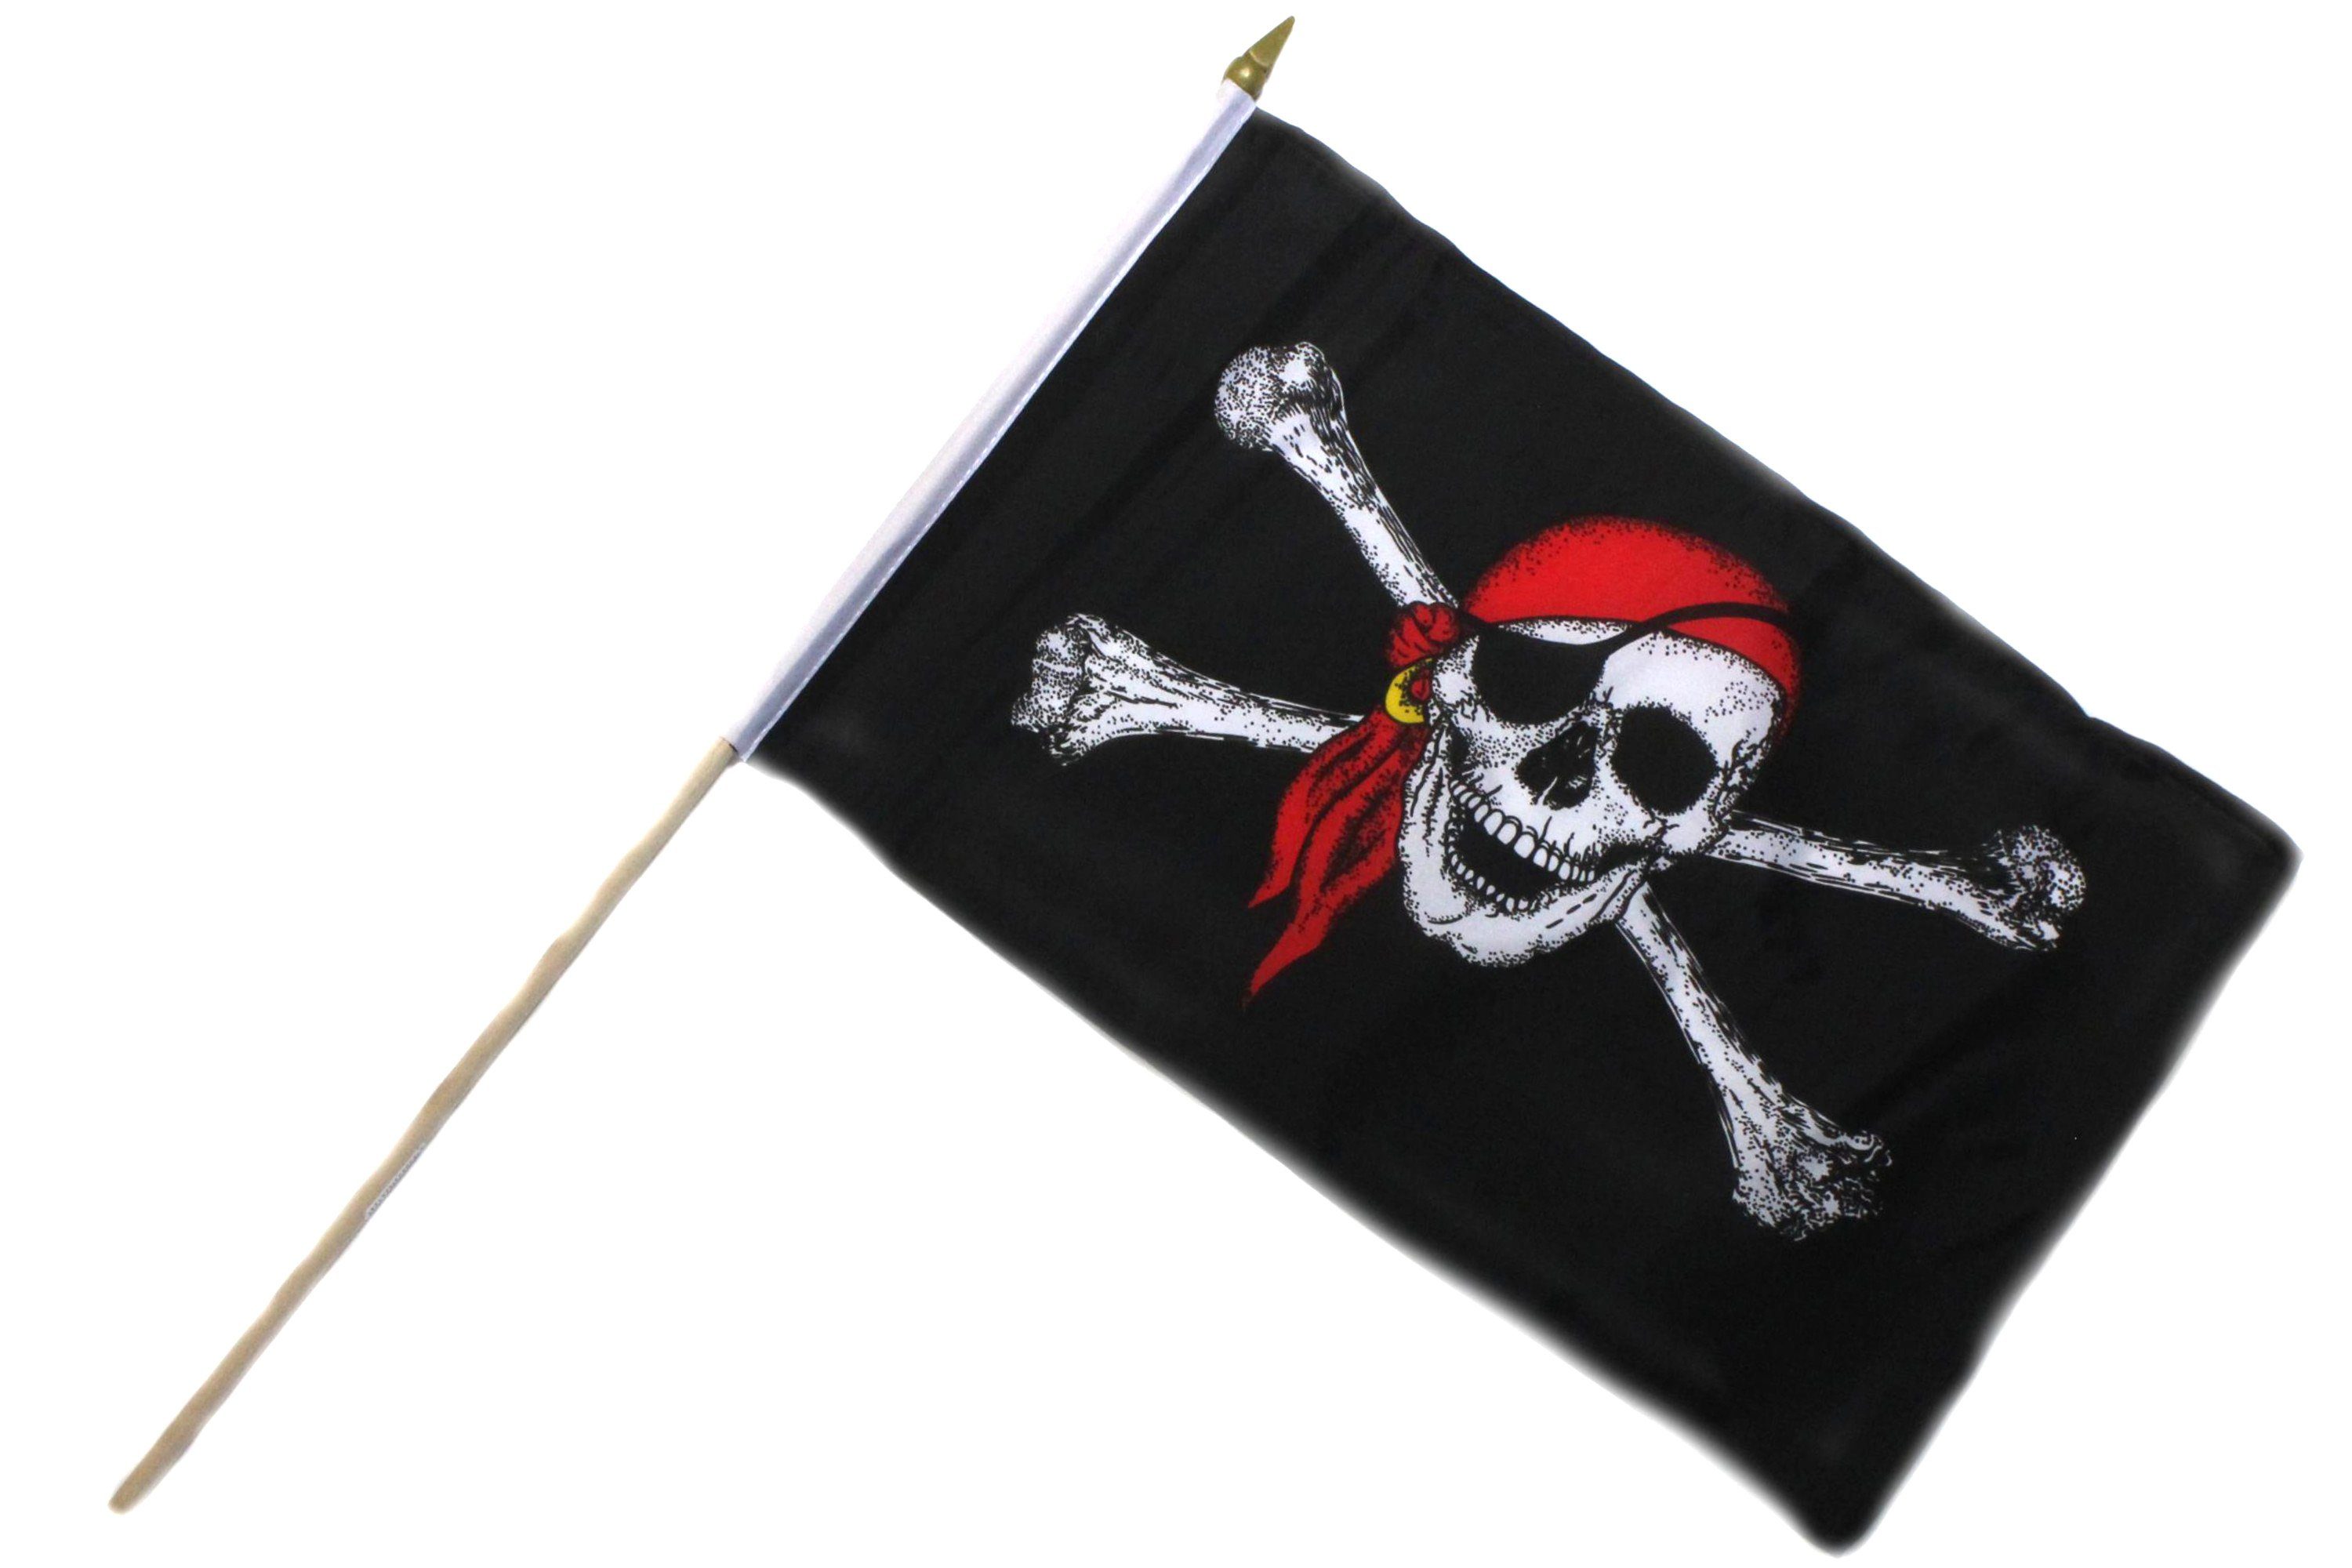 ELLUG Flagge Fahne Flagge 30x45cm doppelt umsäumt mit 60cm Holzstab Handfahne Stockflagge Banner Fan Sport Pirat-Totenkopf